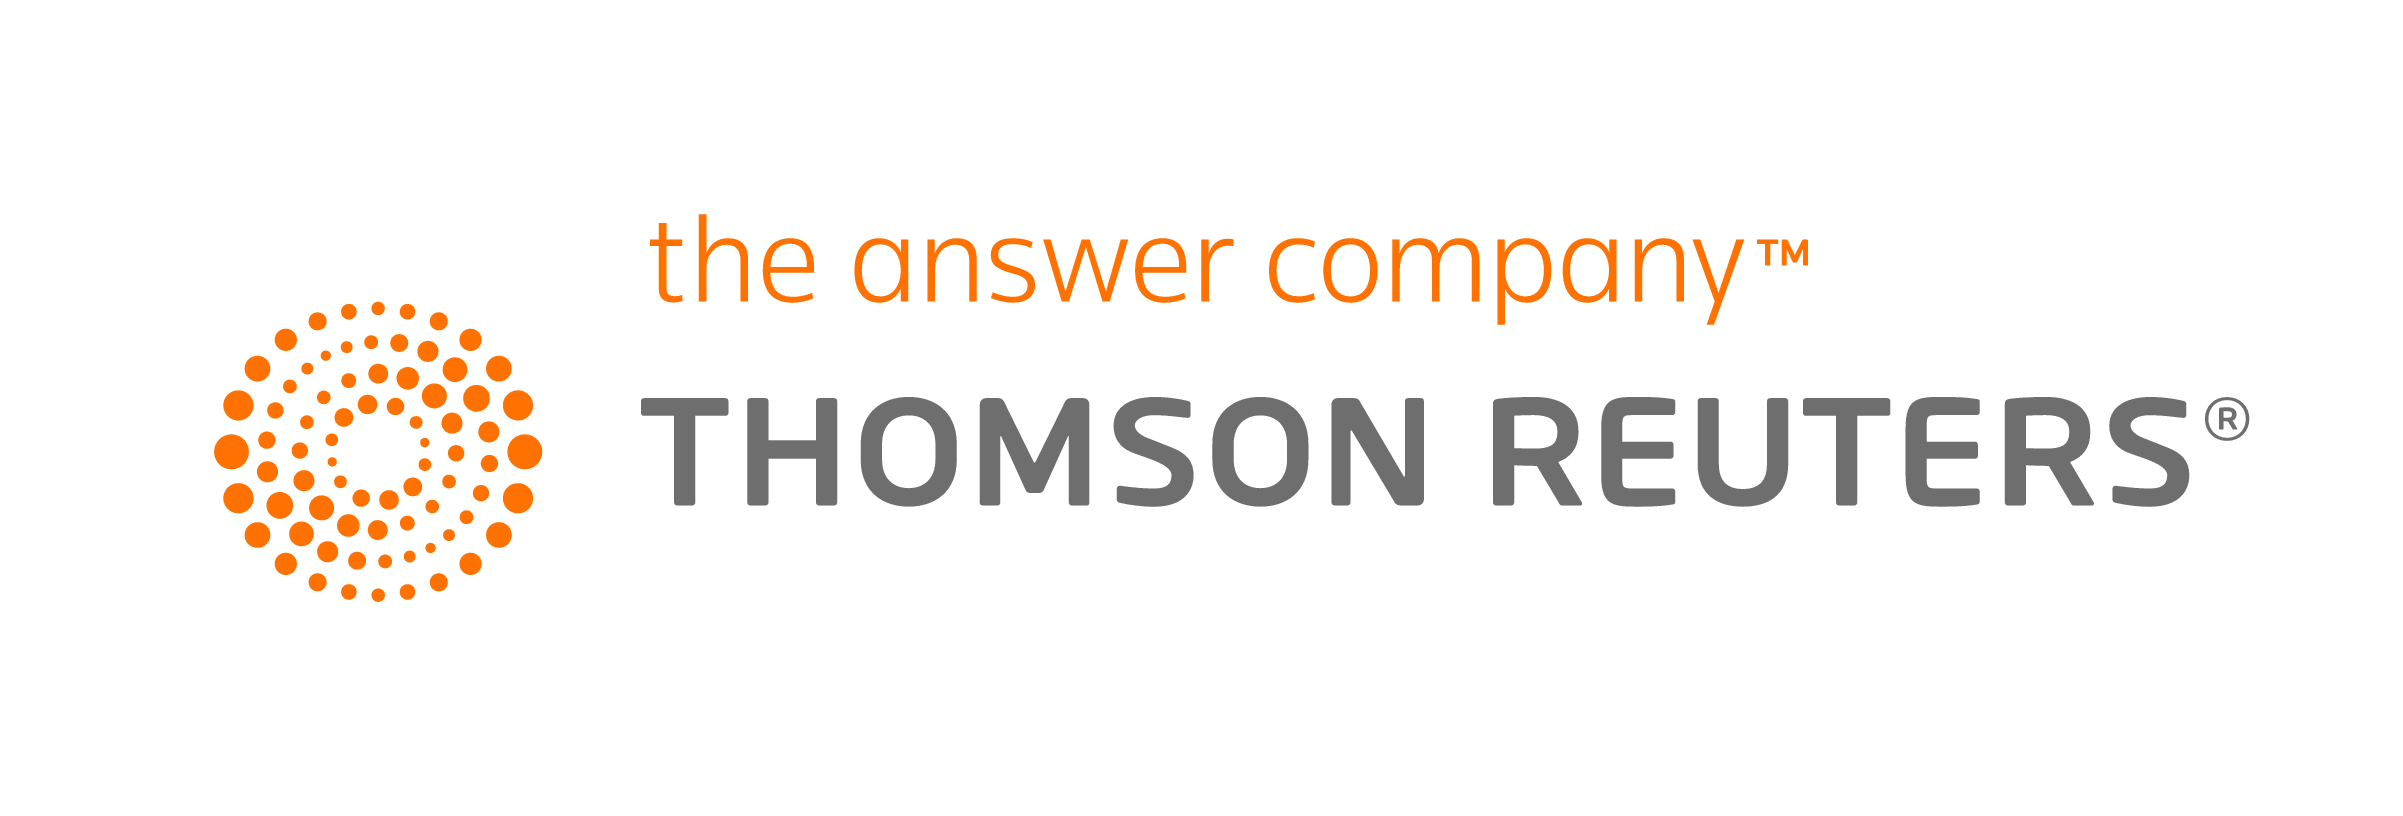 Thomson Reuters - The Answer Company logo